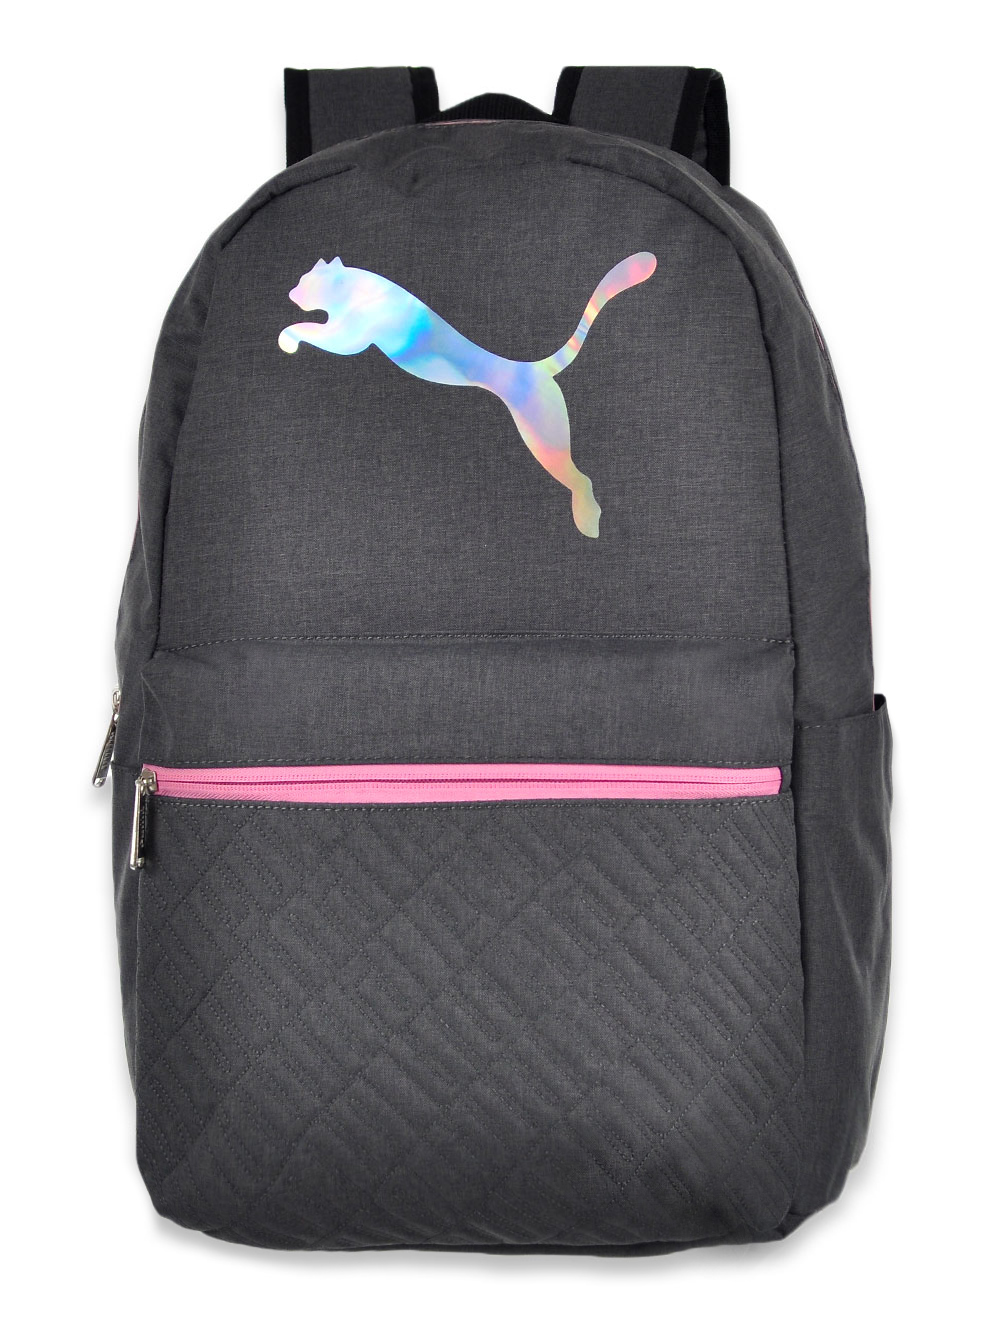 puma school bags for kids